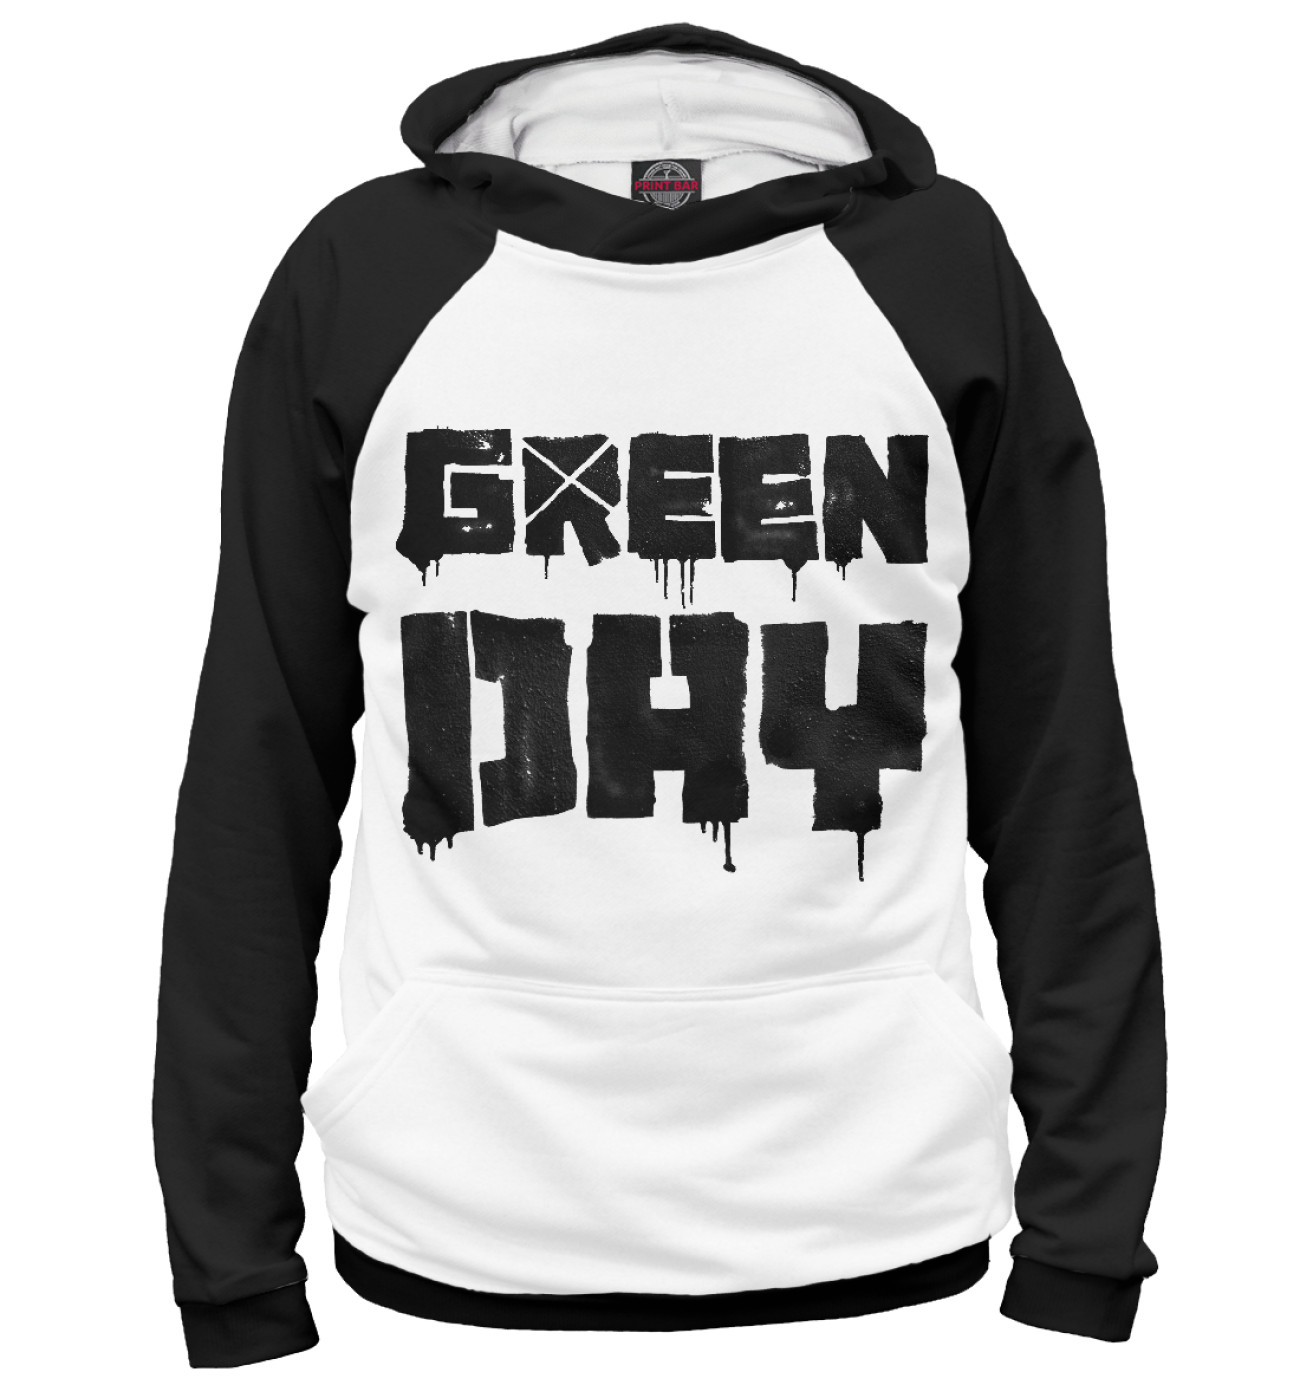 Женское Худи Green Day, артикул: GRE-547269-hud-1